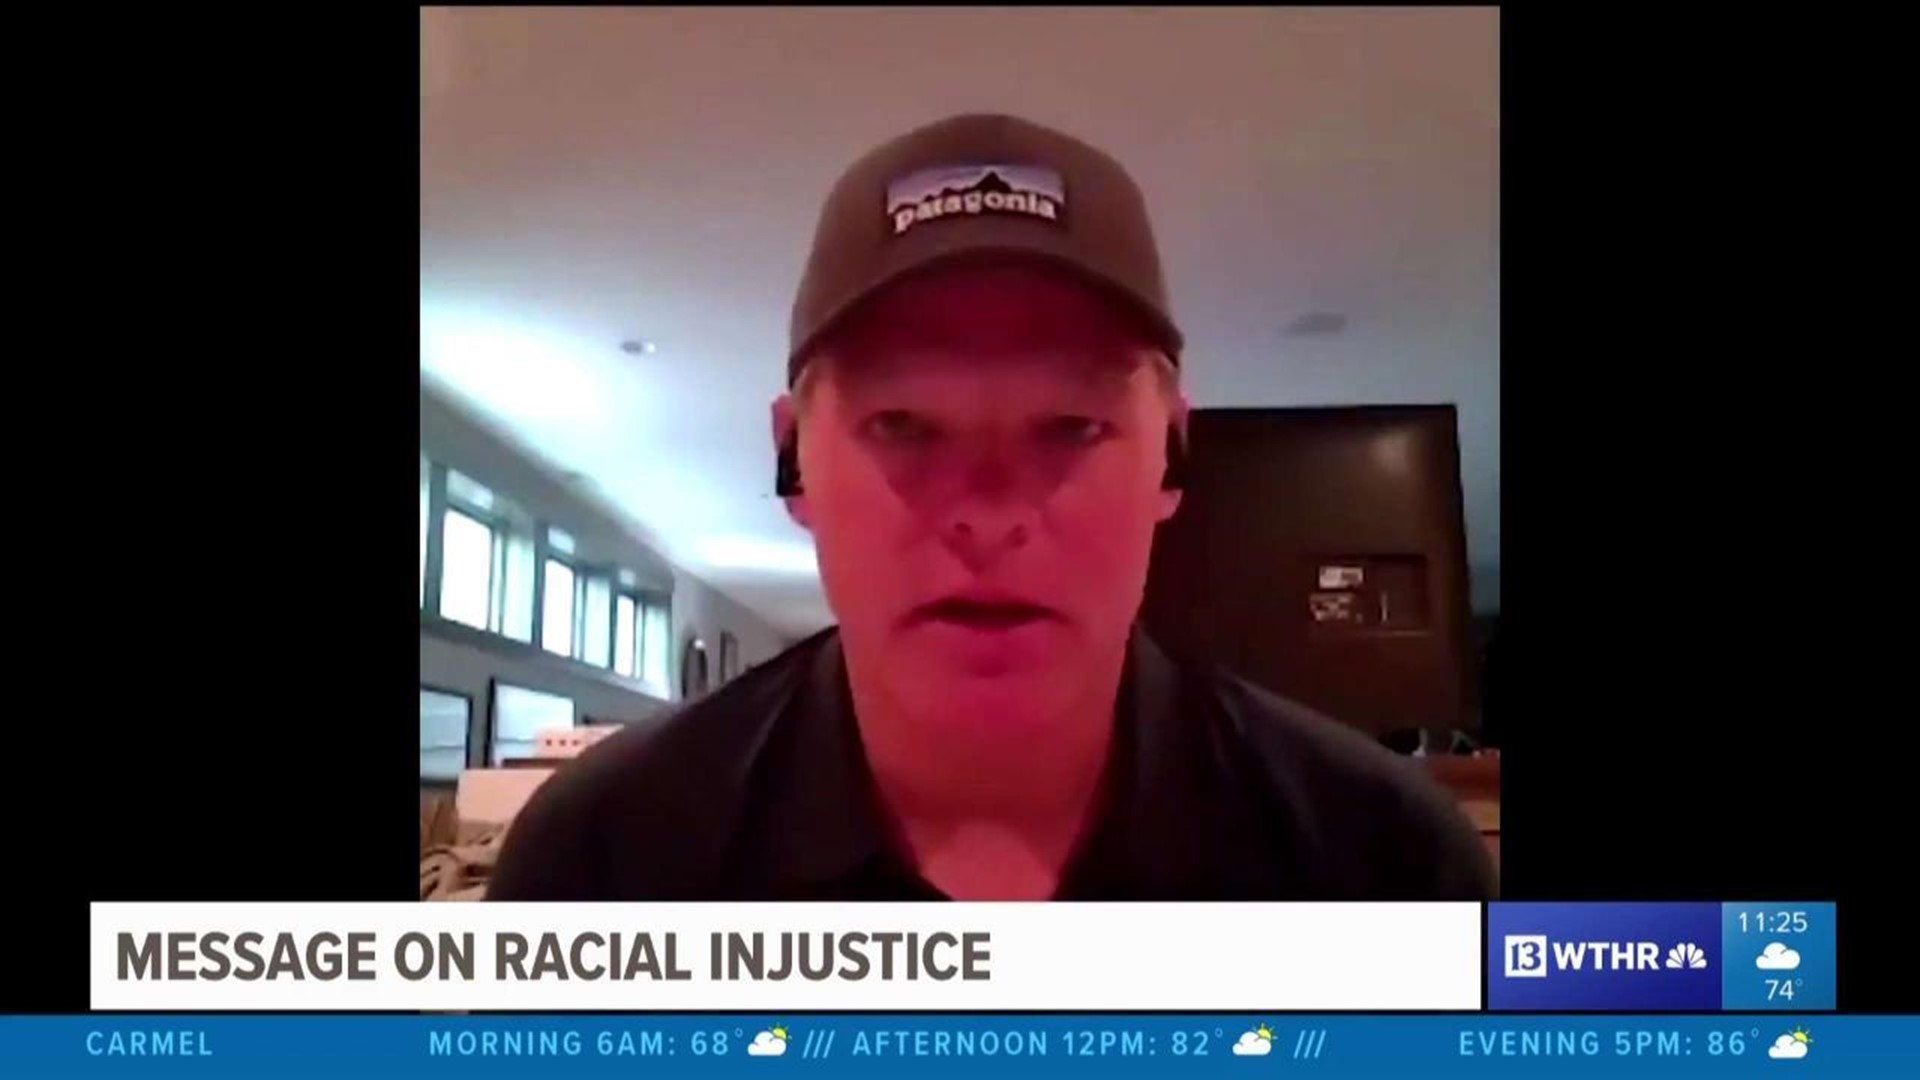 Colts GM Ballard's message on racial injustice